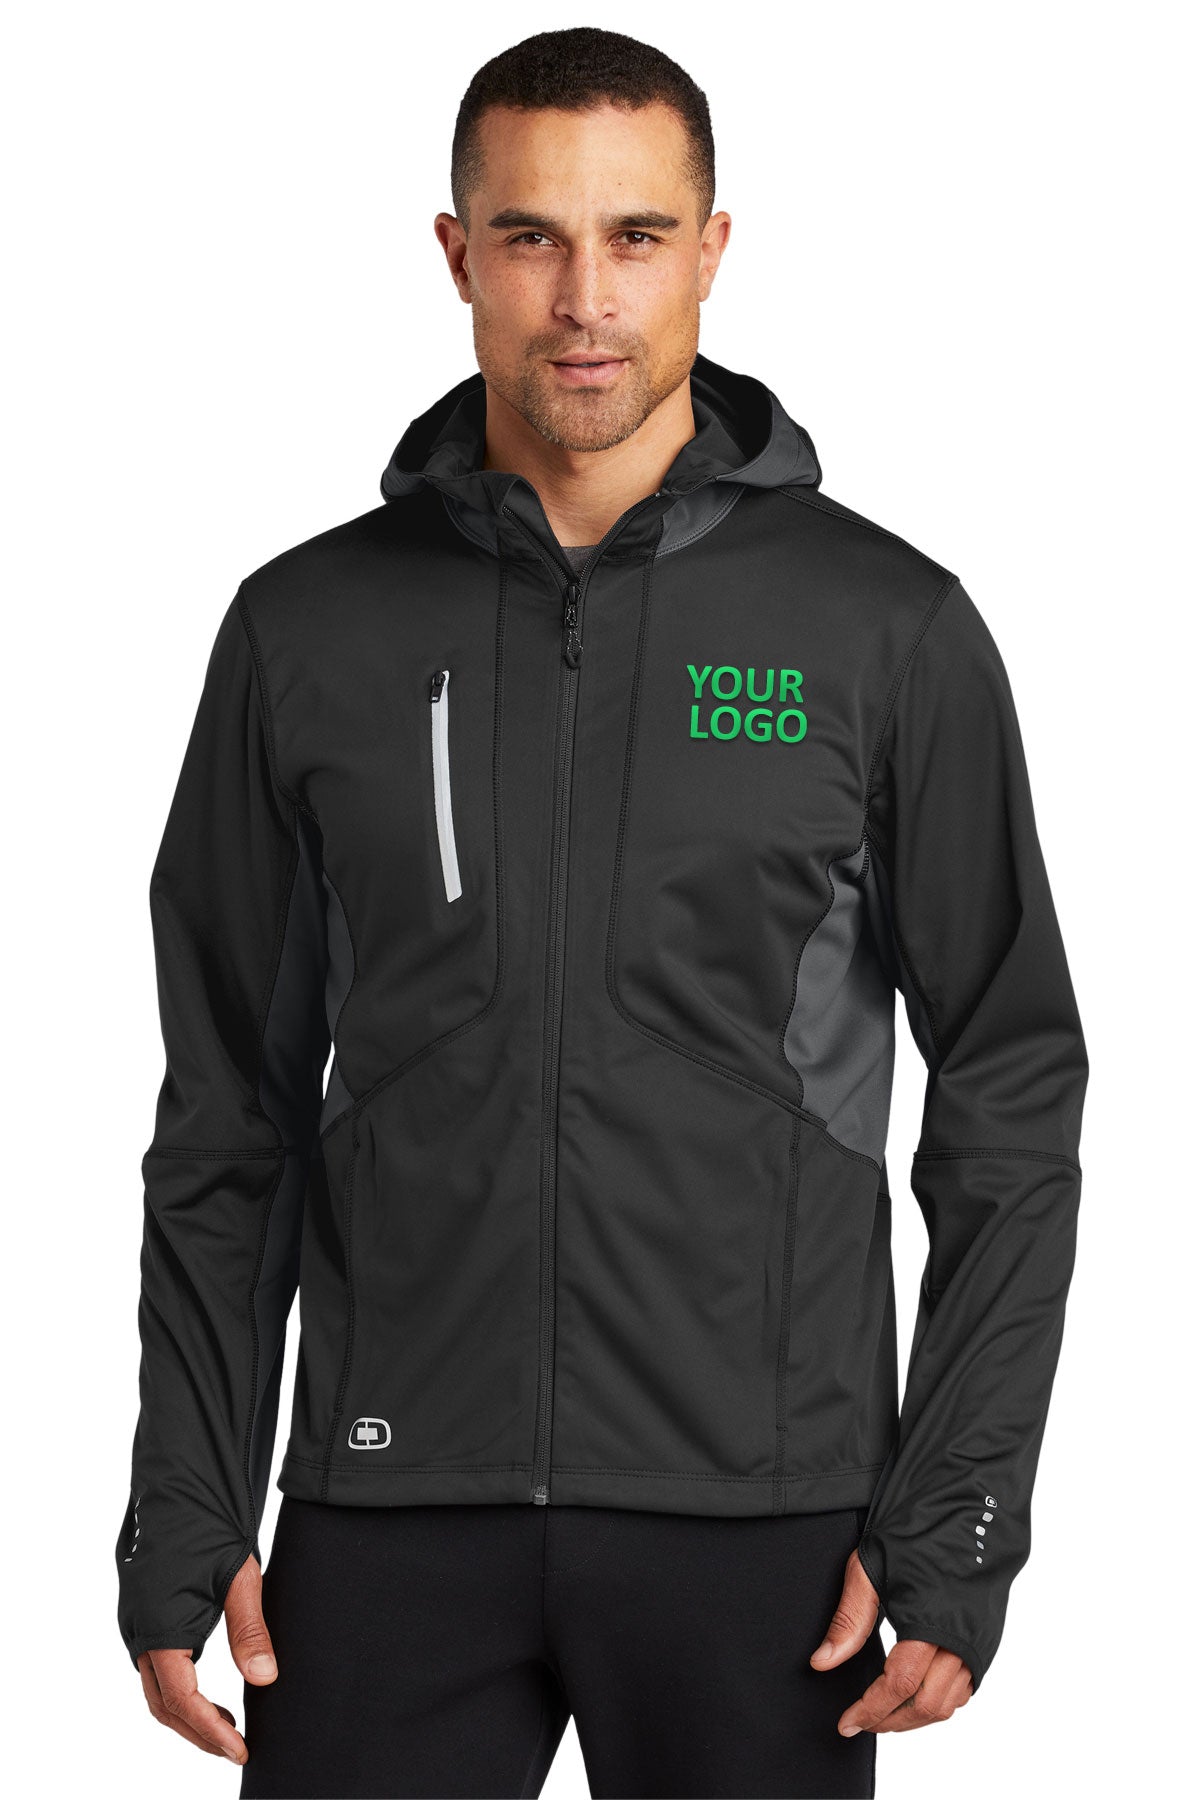 OGIO Endurance Blacktop/ Gear Grey OE721 business logo jackets